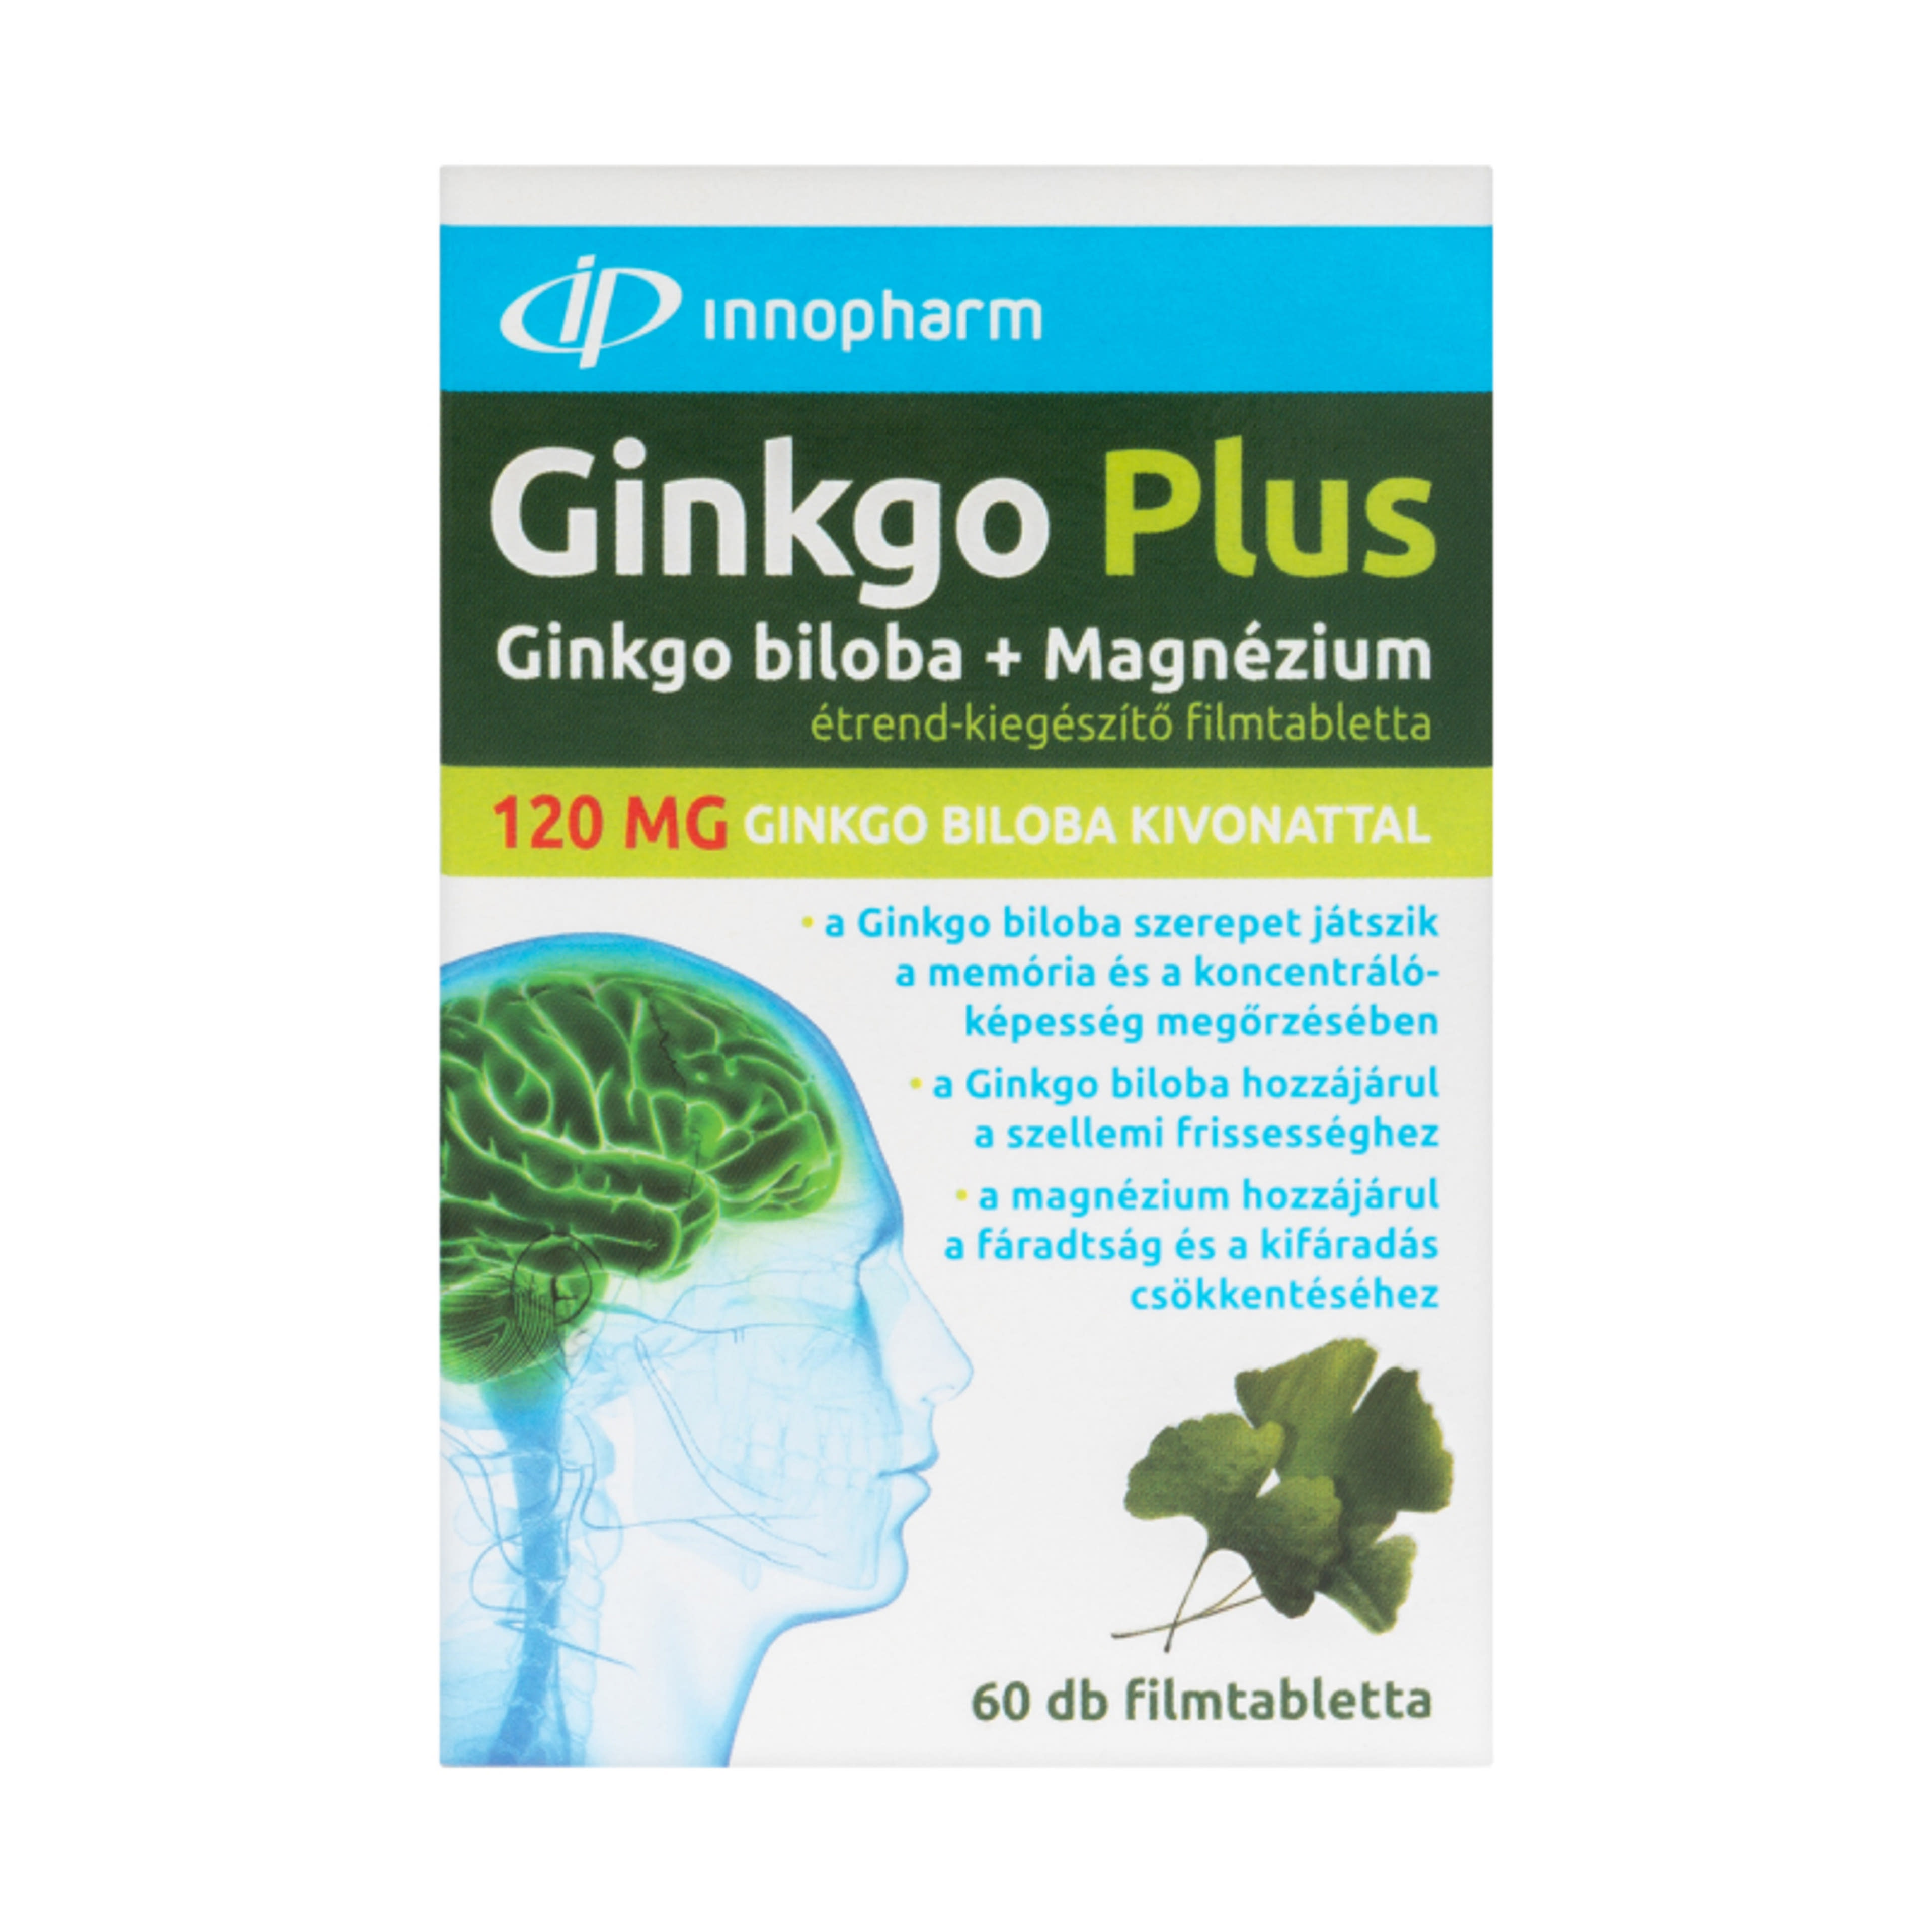 InnoPharm Ginkgo Plus Ginkgo biloba 120 mg + magnézium filmtabletta - 60 db